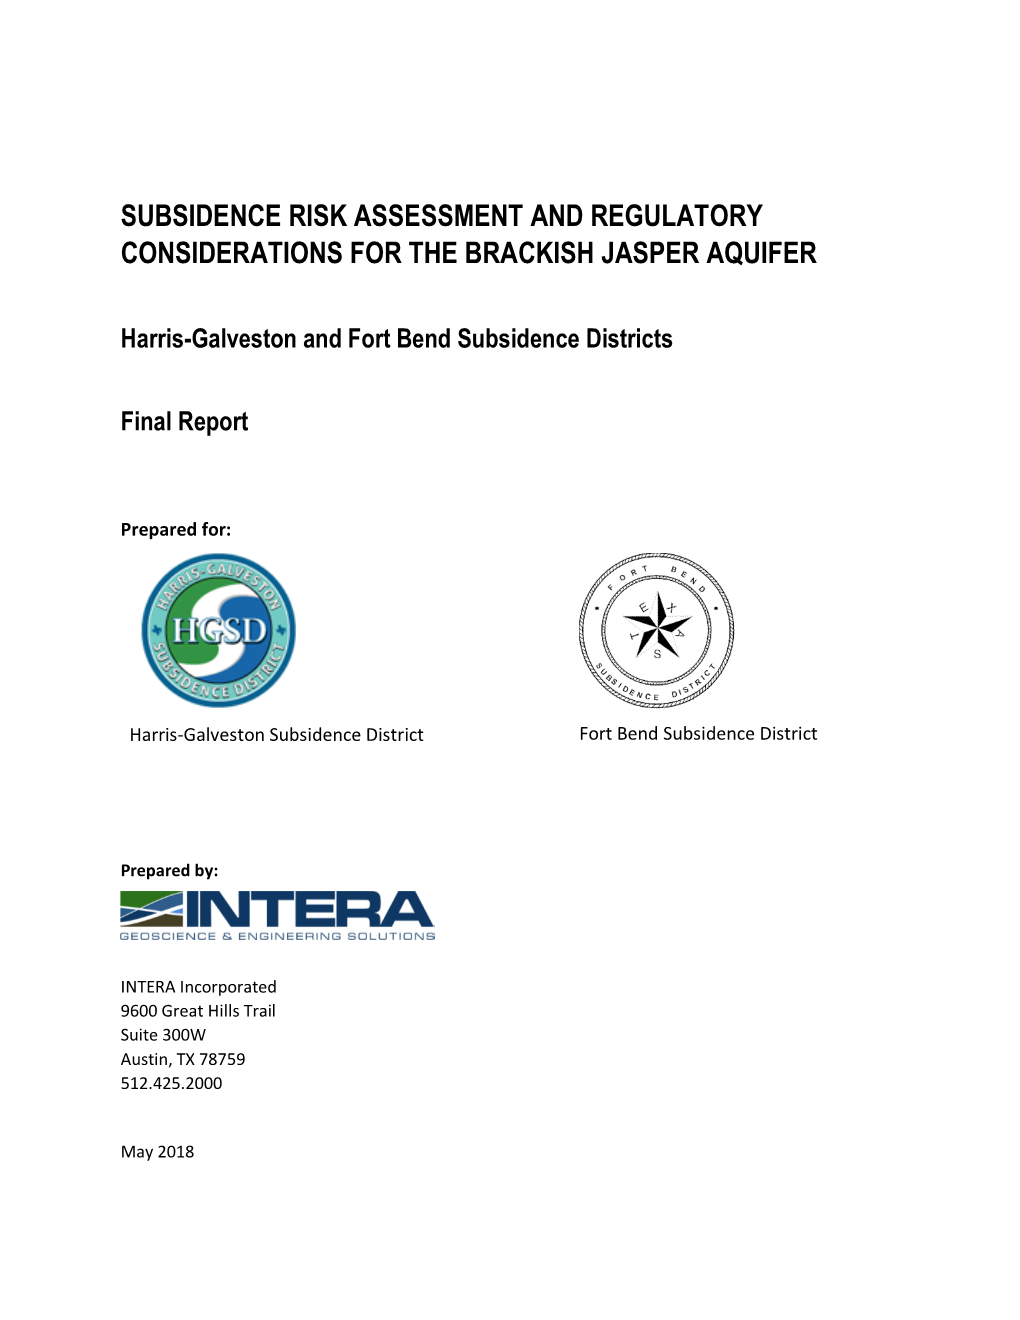 Subsidence Risk Assessment and Regulatory Considerations for the Brackish Jasper Aquifer